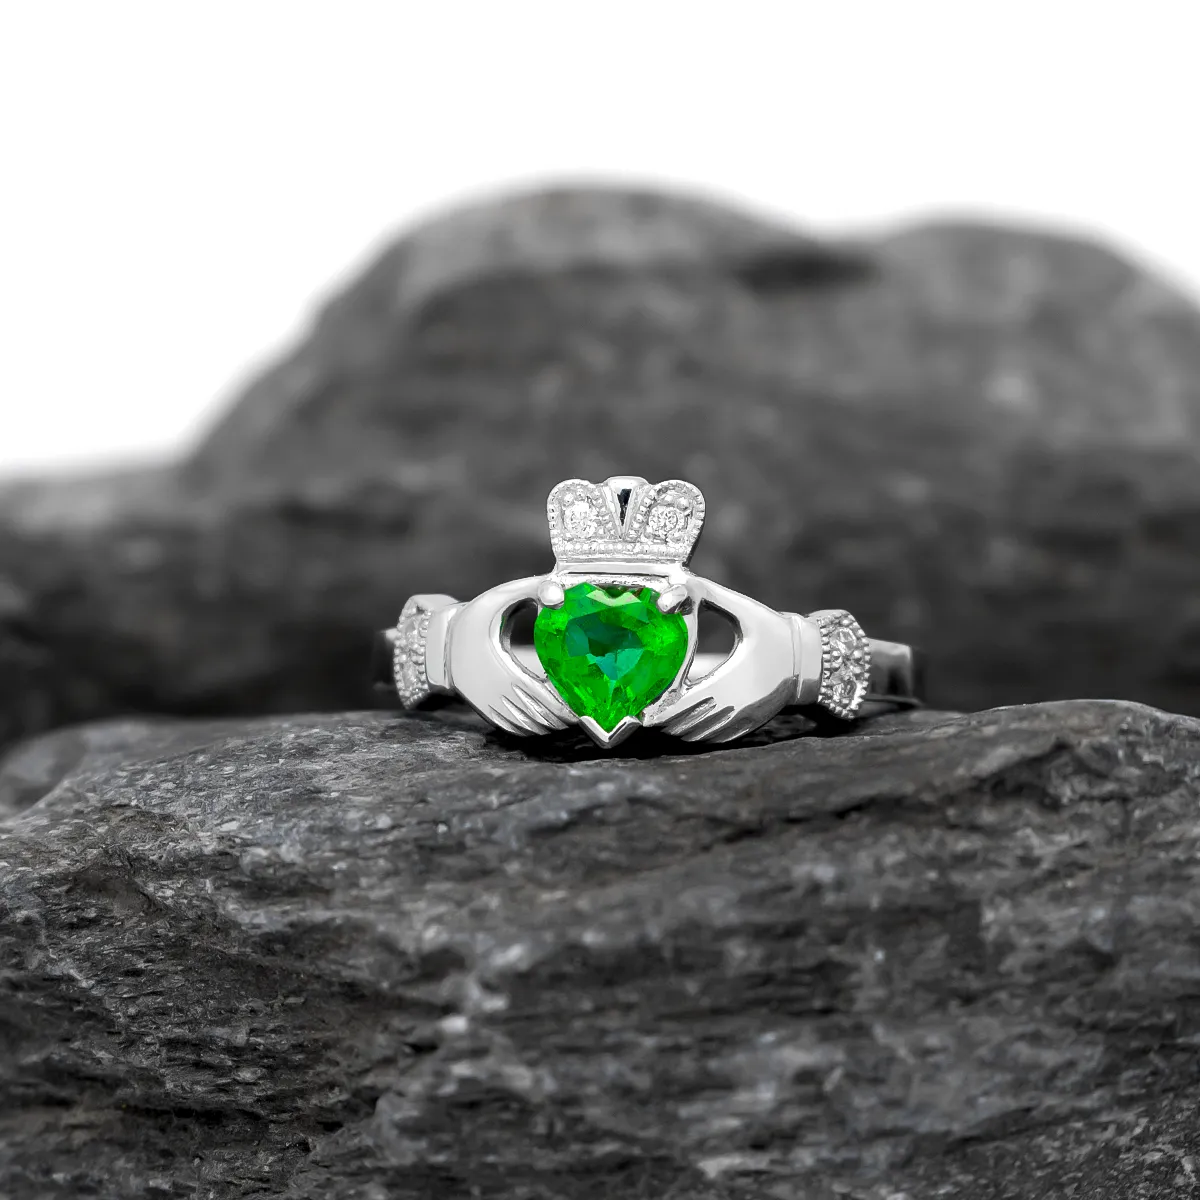 Elegantly Designed Claddagh Ring Featuring A Glistening Heart-shaped Emerald